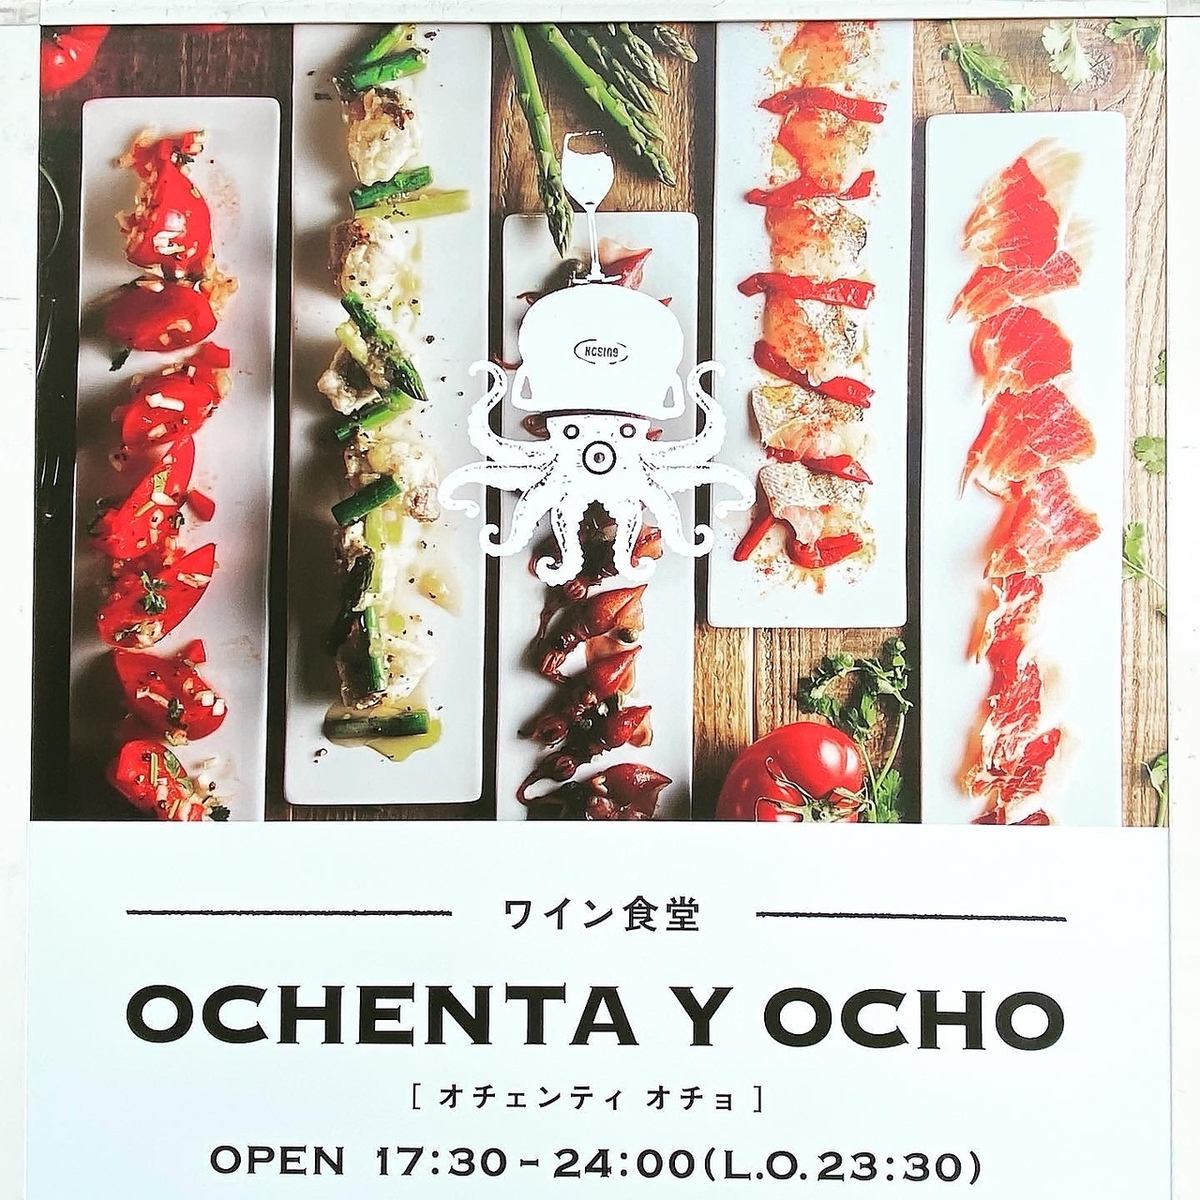 Ochentiocho，一家葡萄酒餐廳，您可以在這裡享用傳統的西班牙美食